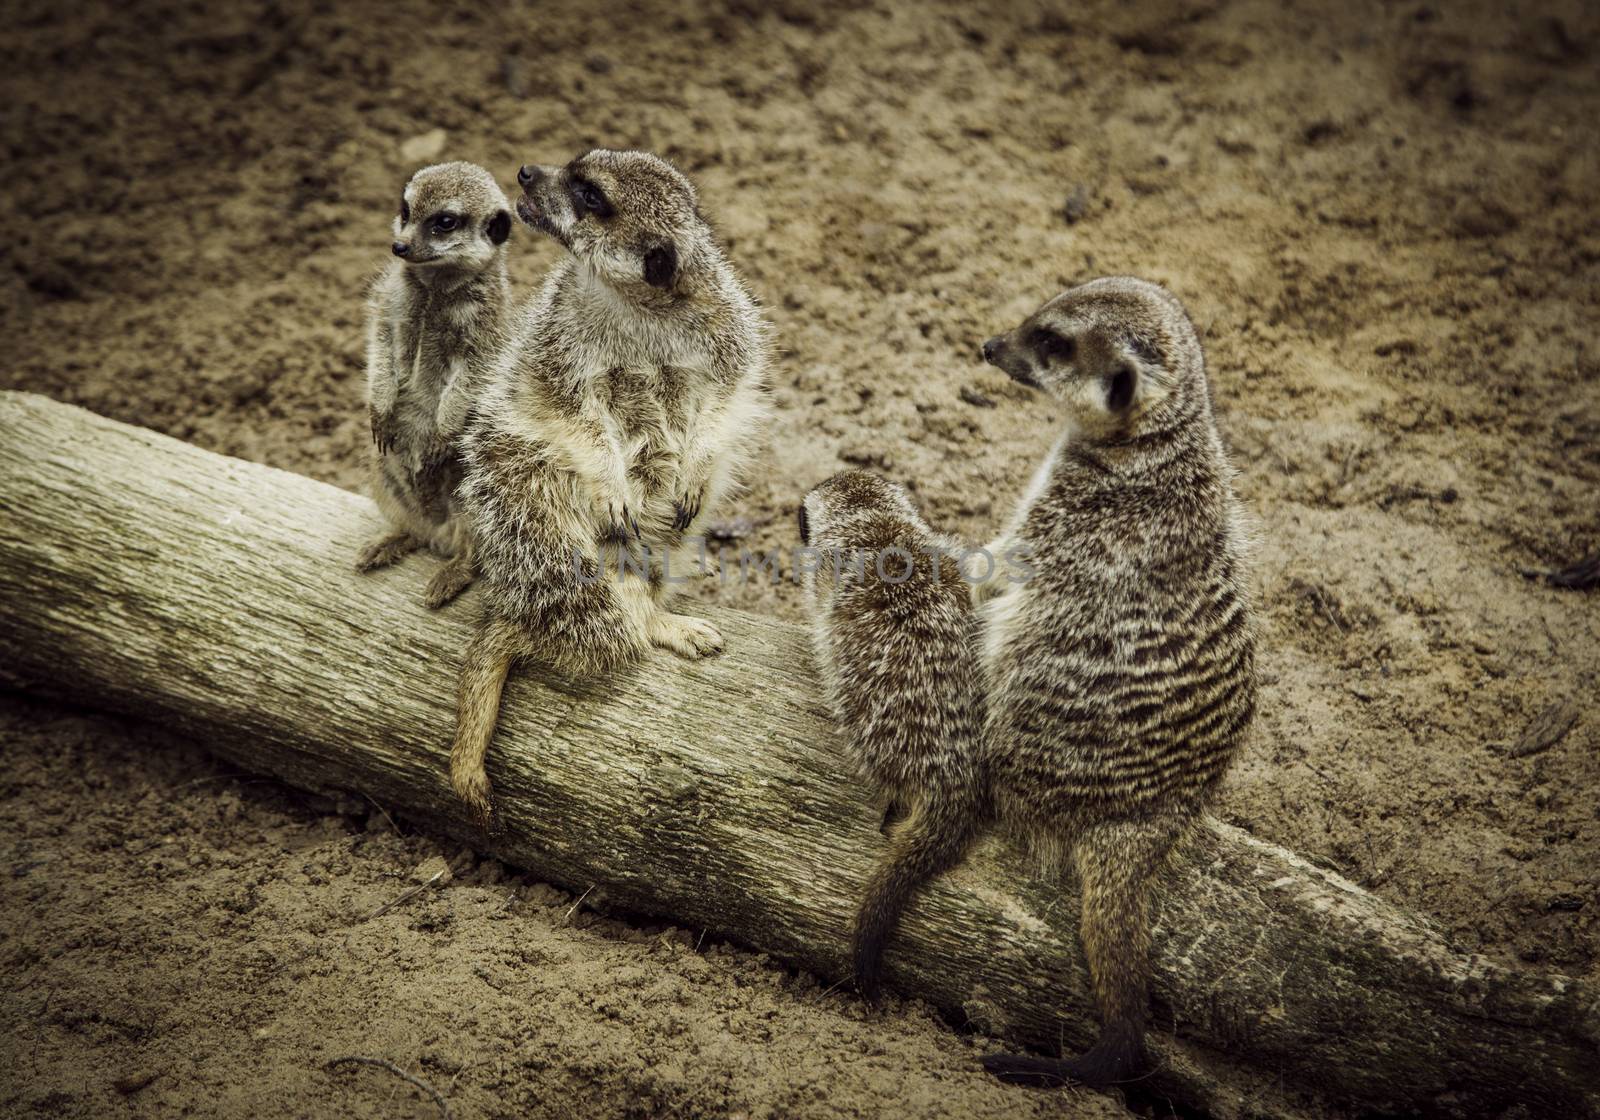 Meerkats in the nature by esebene